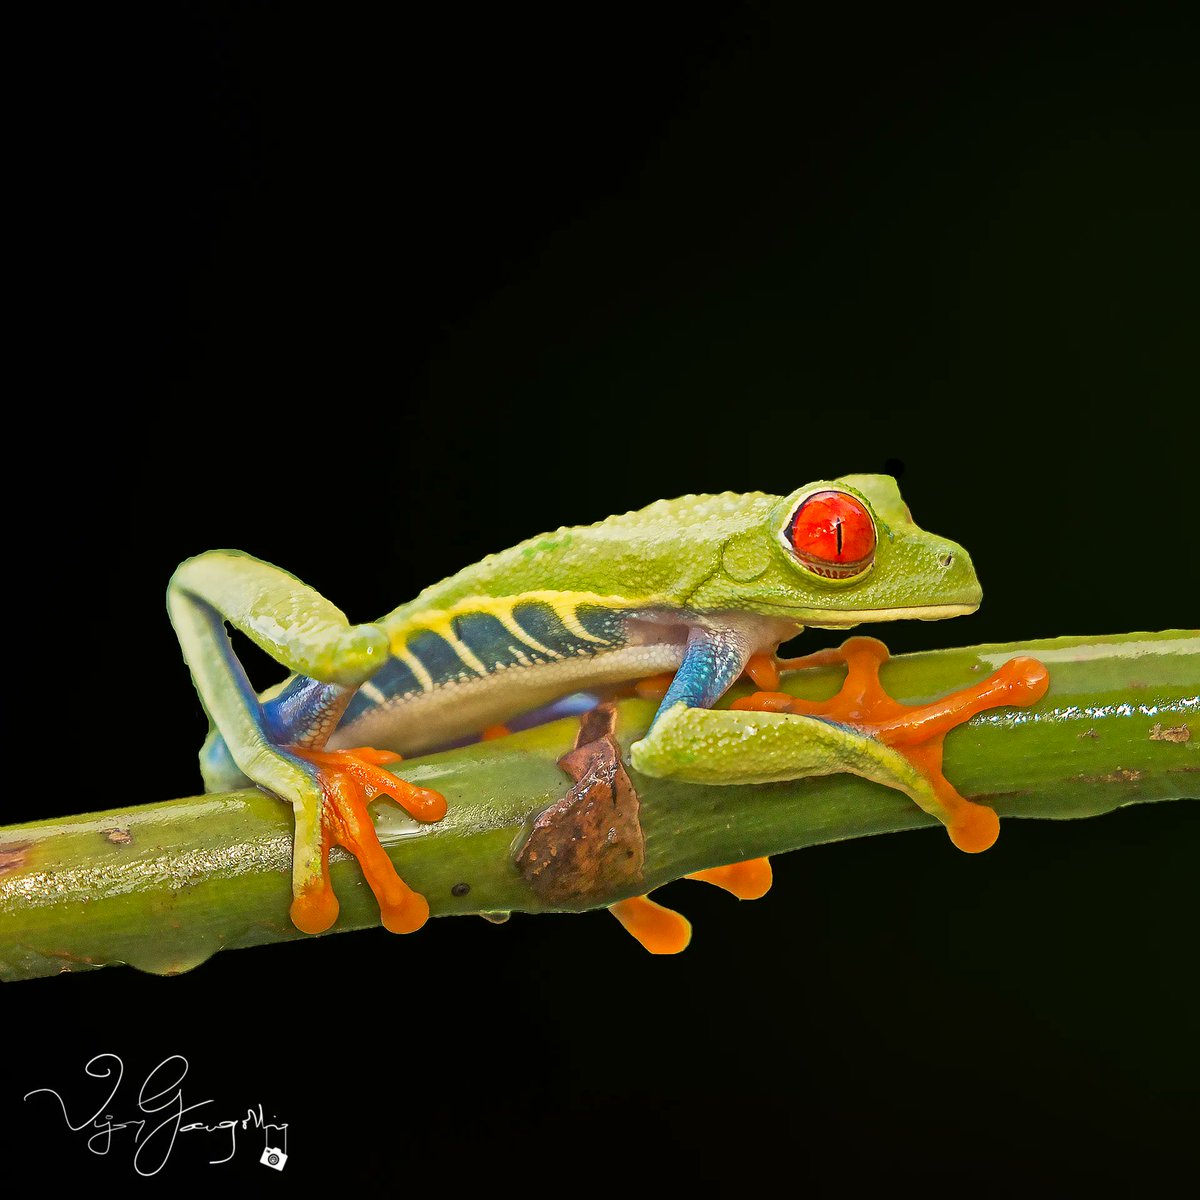 Red eyed tree frog, Costa Rica.⠀
.
.
#frogs #macro_freaks #treefrogs⠀⠀
#macros #macrophotography #macro #macroworld_tr #macro_perfection #macromood #macrophotographylove #macro_vision #macro_holic #macrophotography_club #macro_x #macroshot #closeup #MacroClique